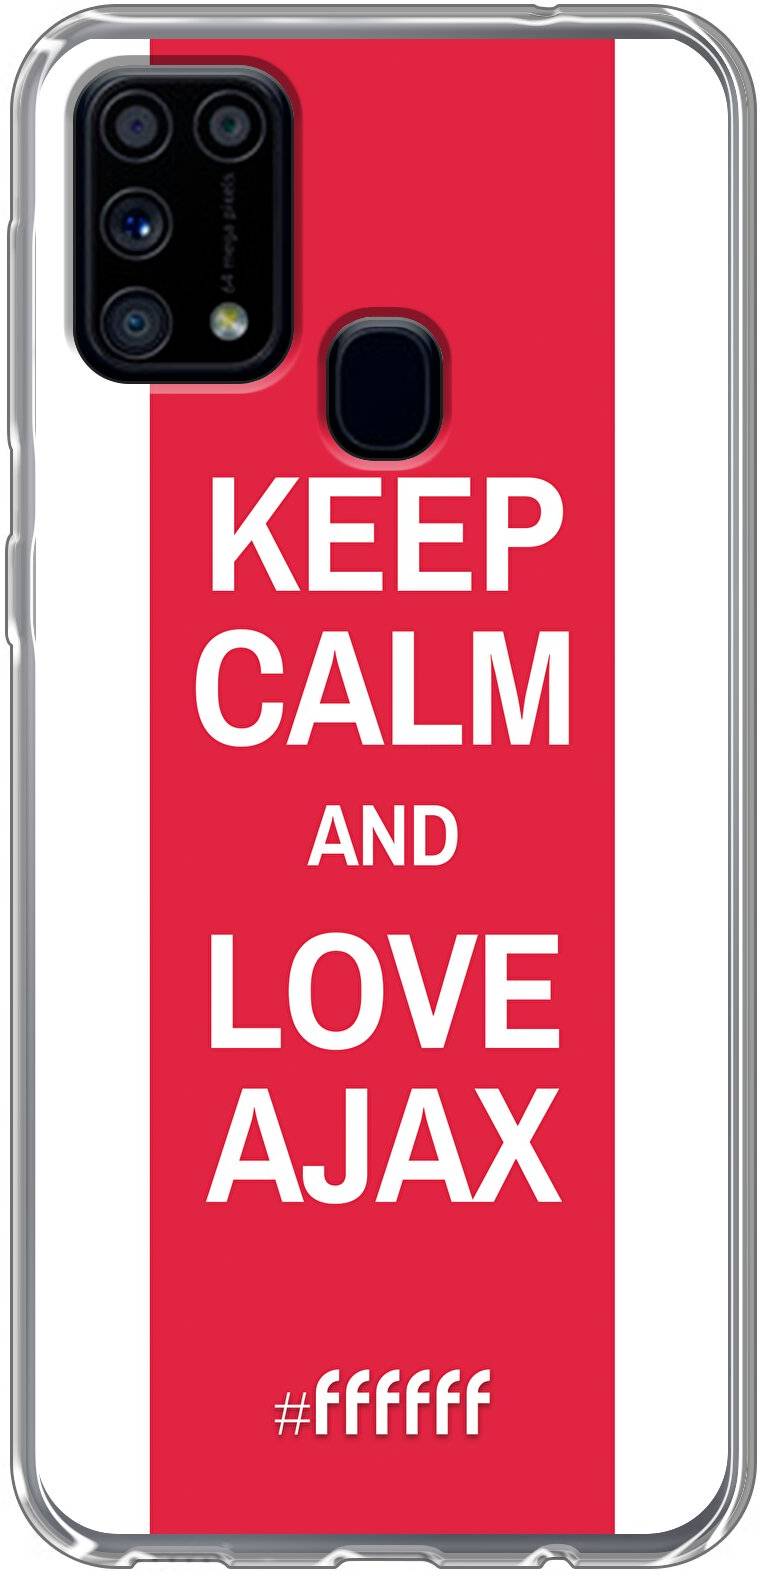 AFC Ajax Keep Calm Galaxy M31